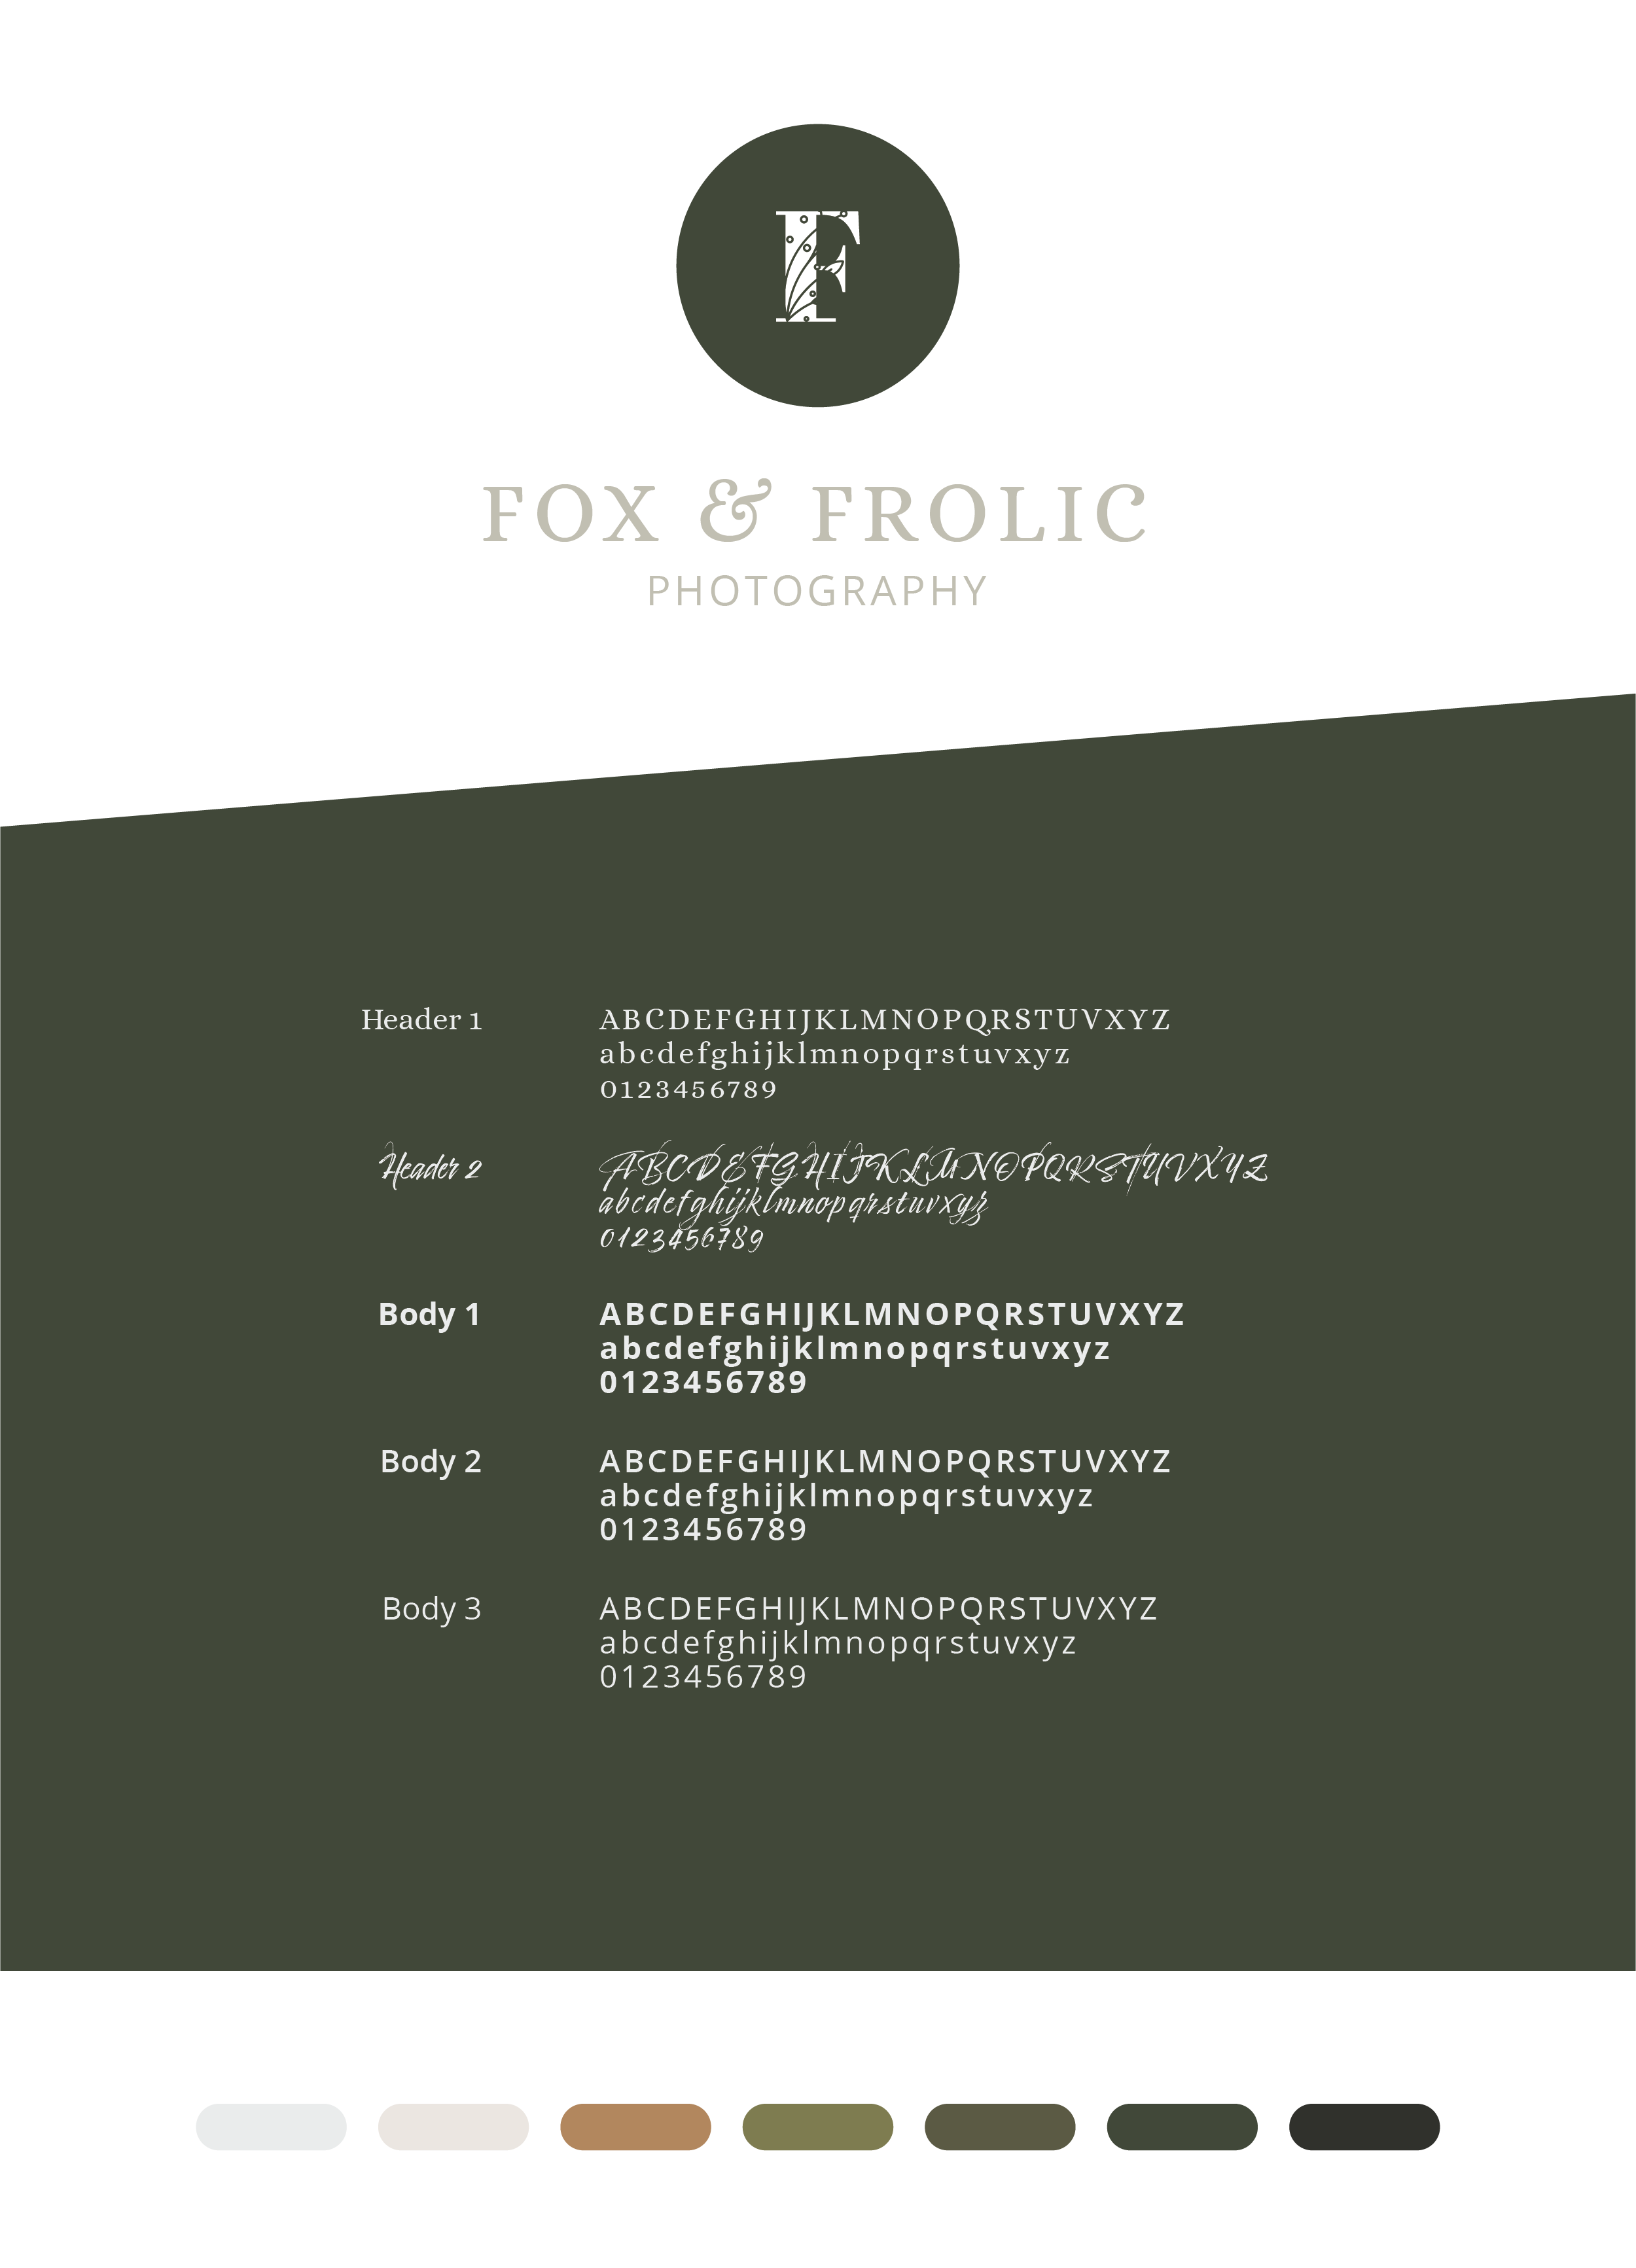 foxandfrolic-01.png